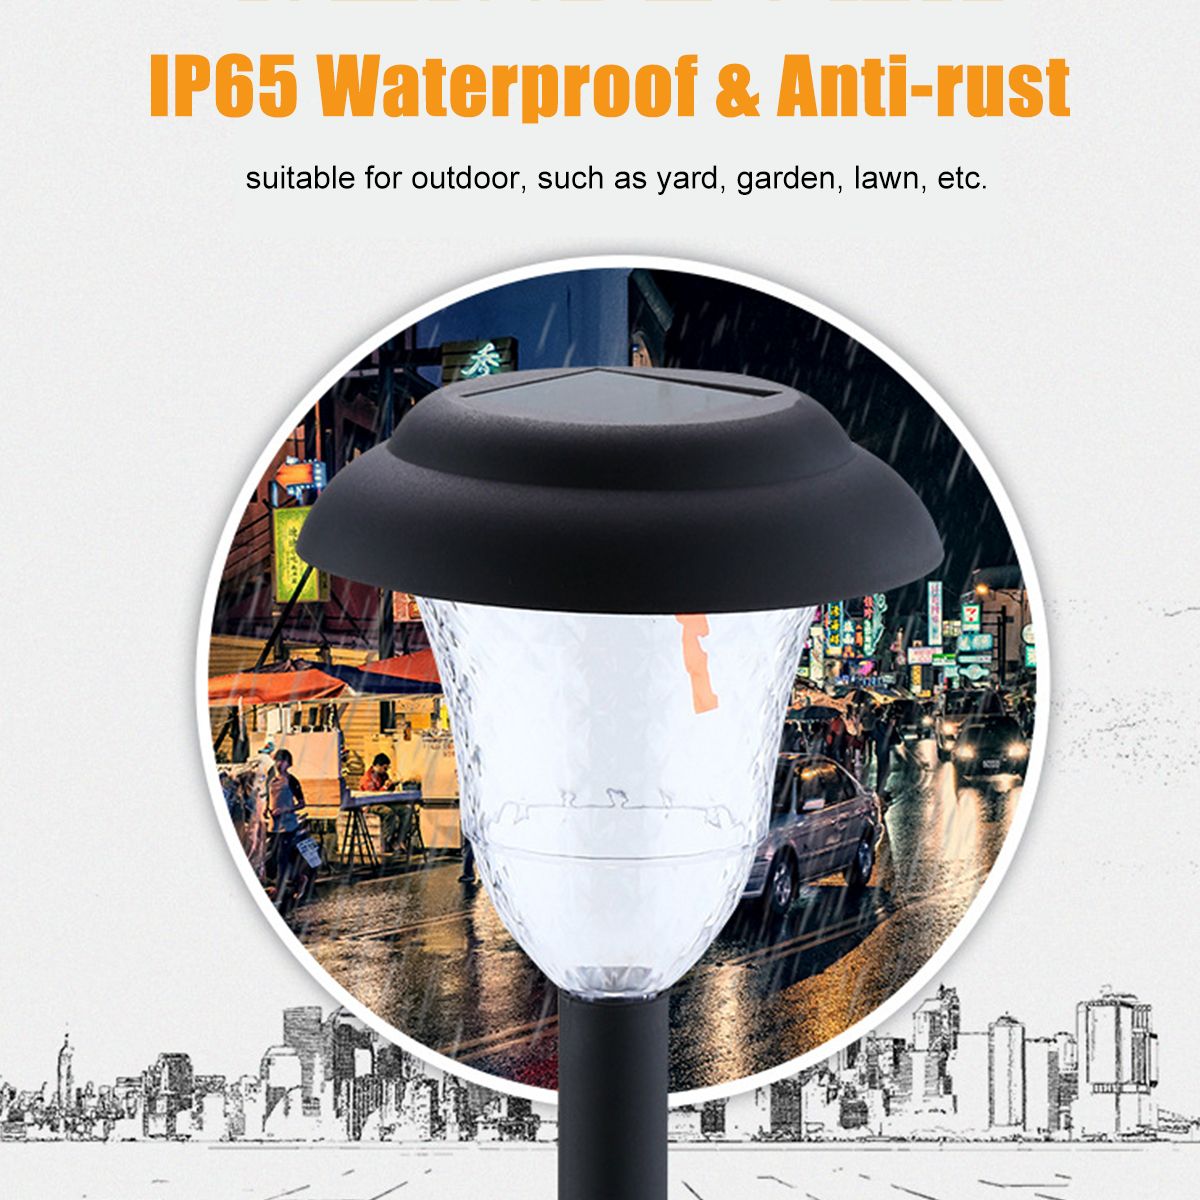 IP65-Waterproof-2PCS-Auto-Sensing-LED-Solar-Lamp-Garden-Lamps-for-Outdoor-Patio-Lawn-1755215